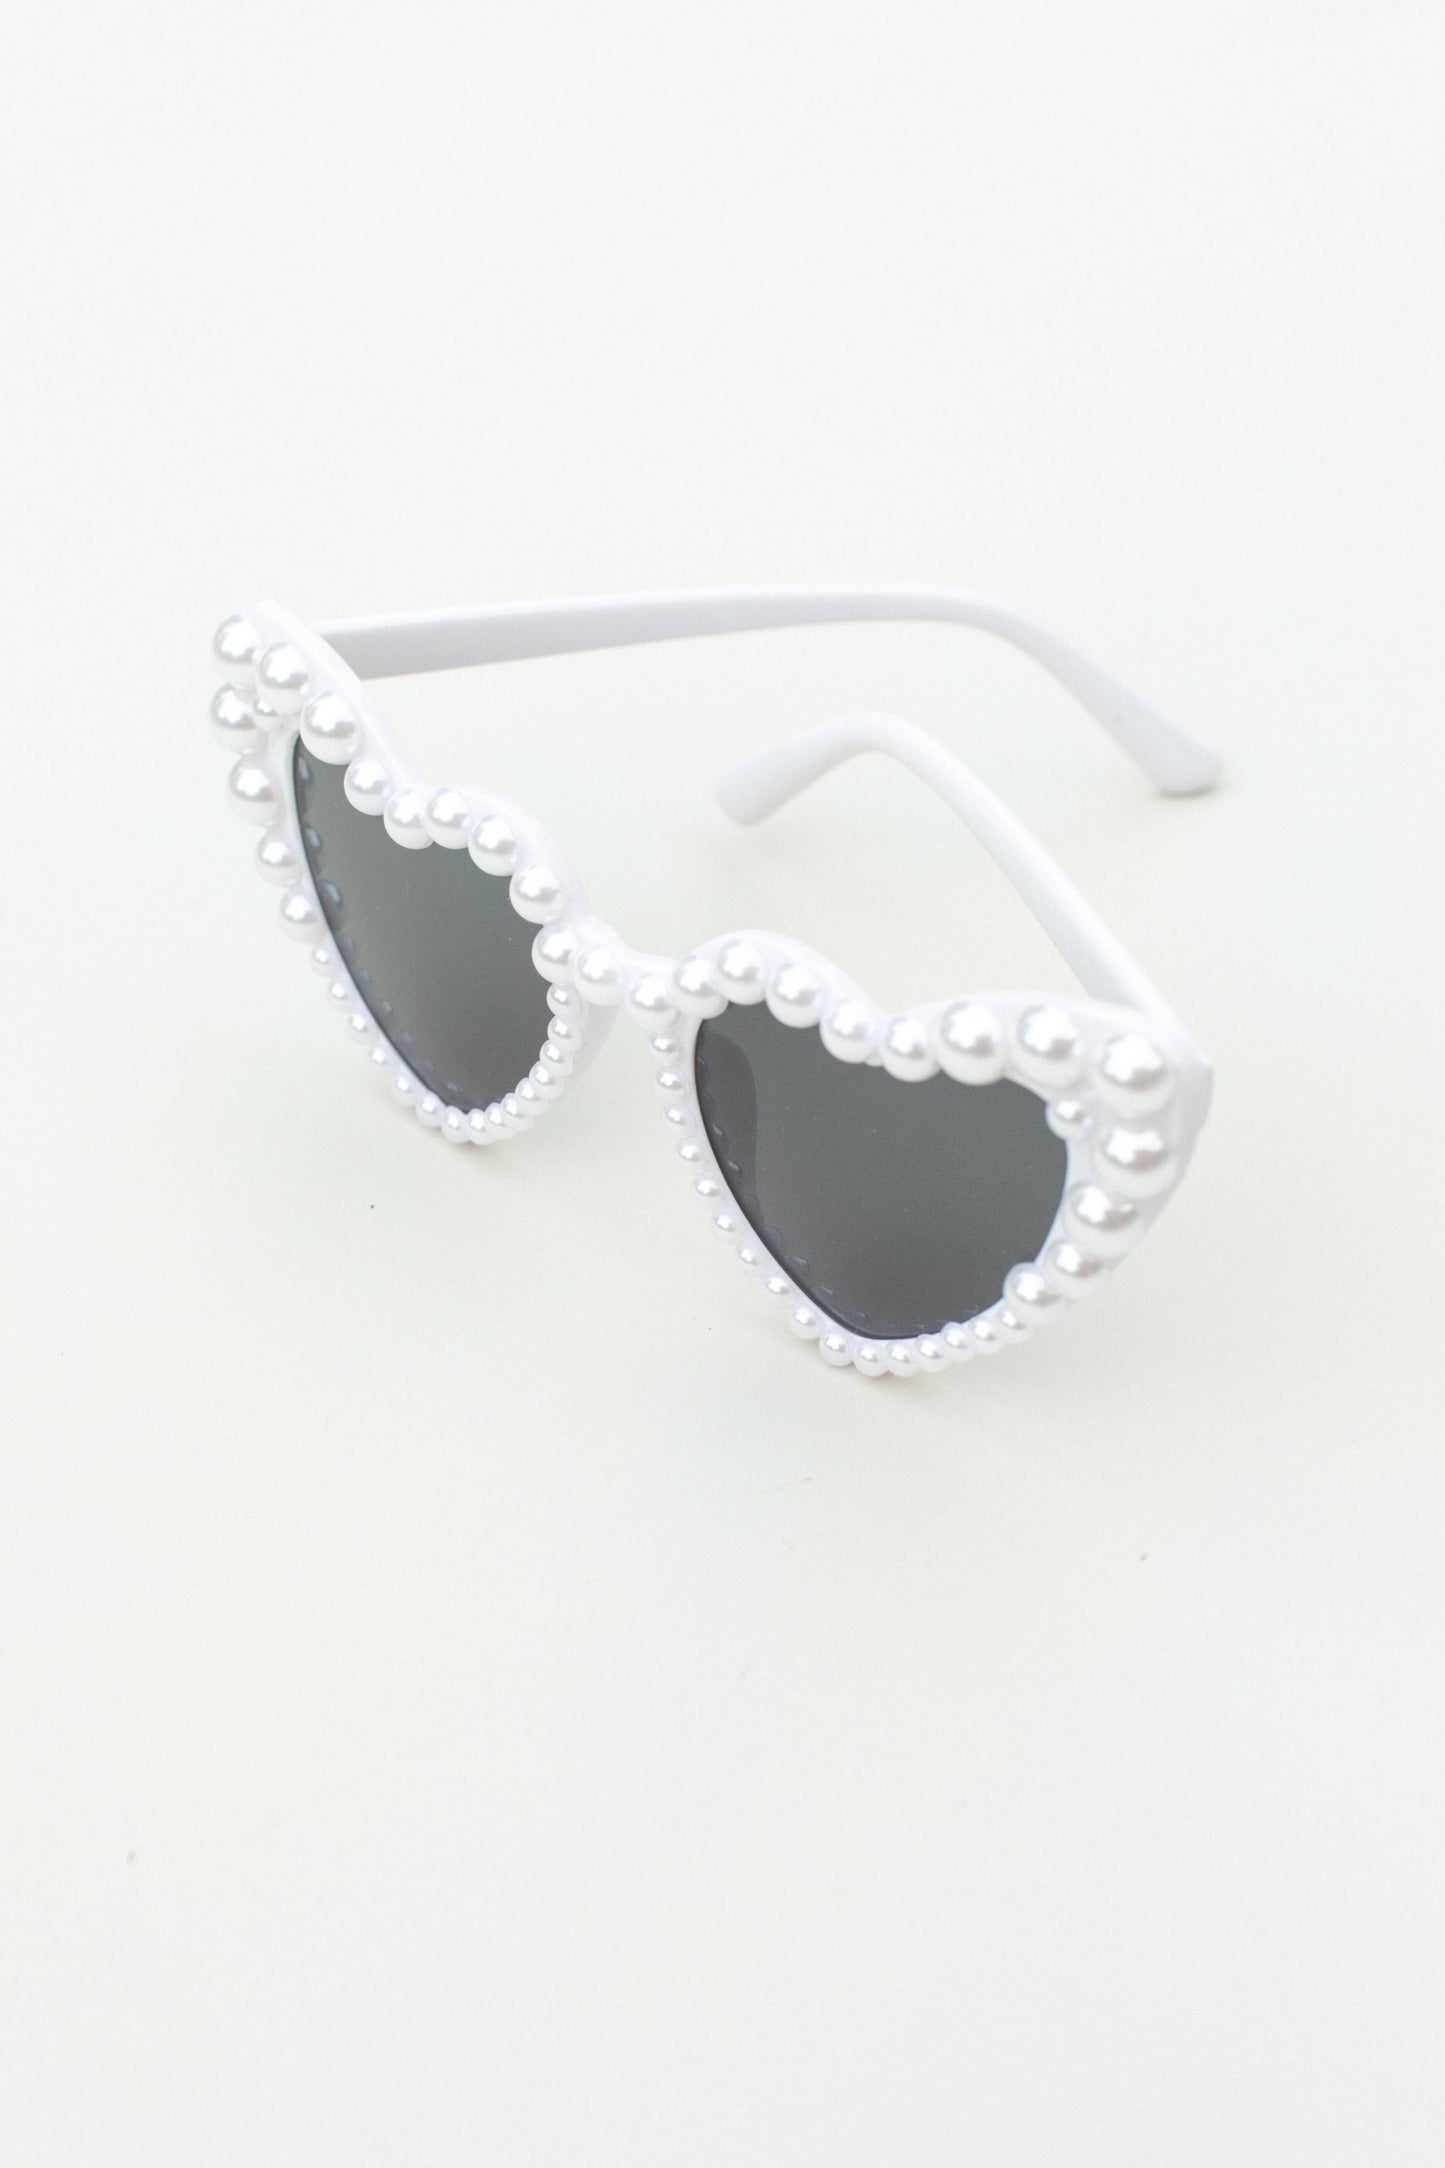 Pearl Heart Sunglasses